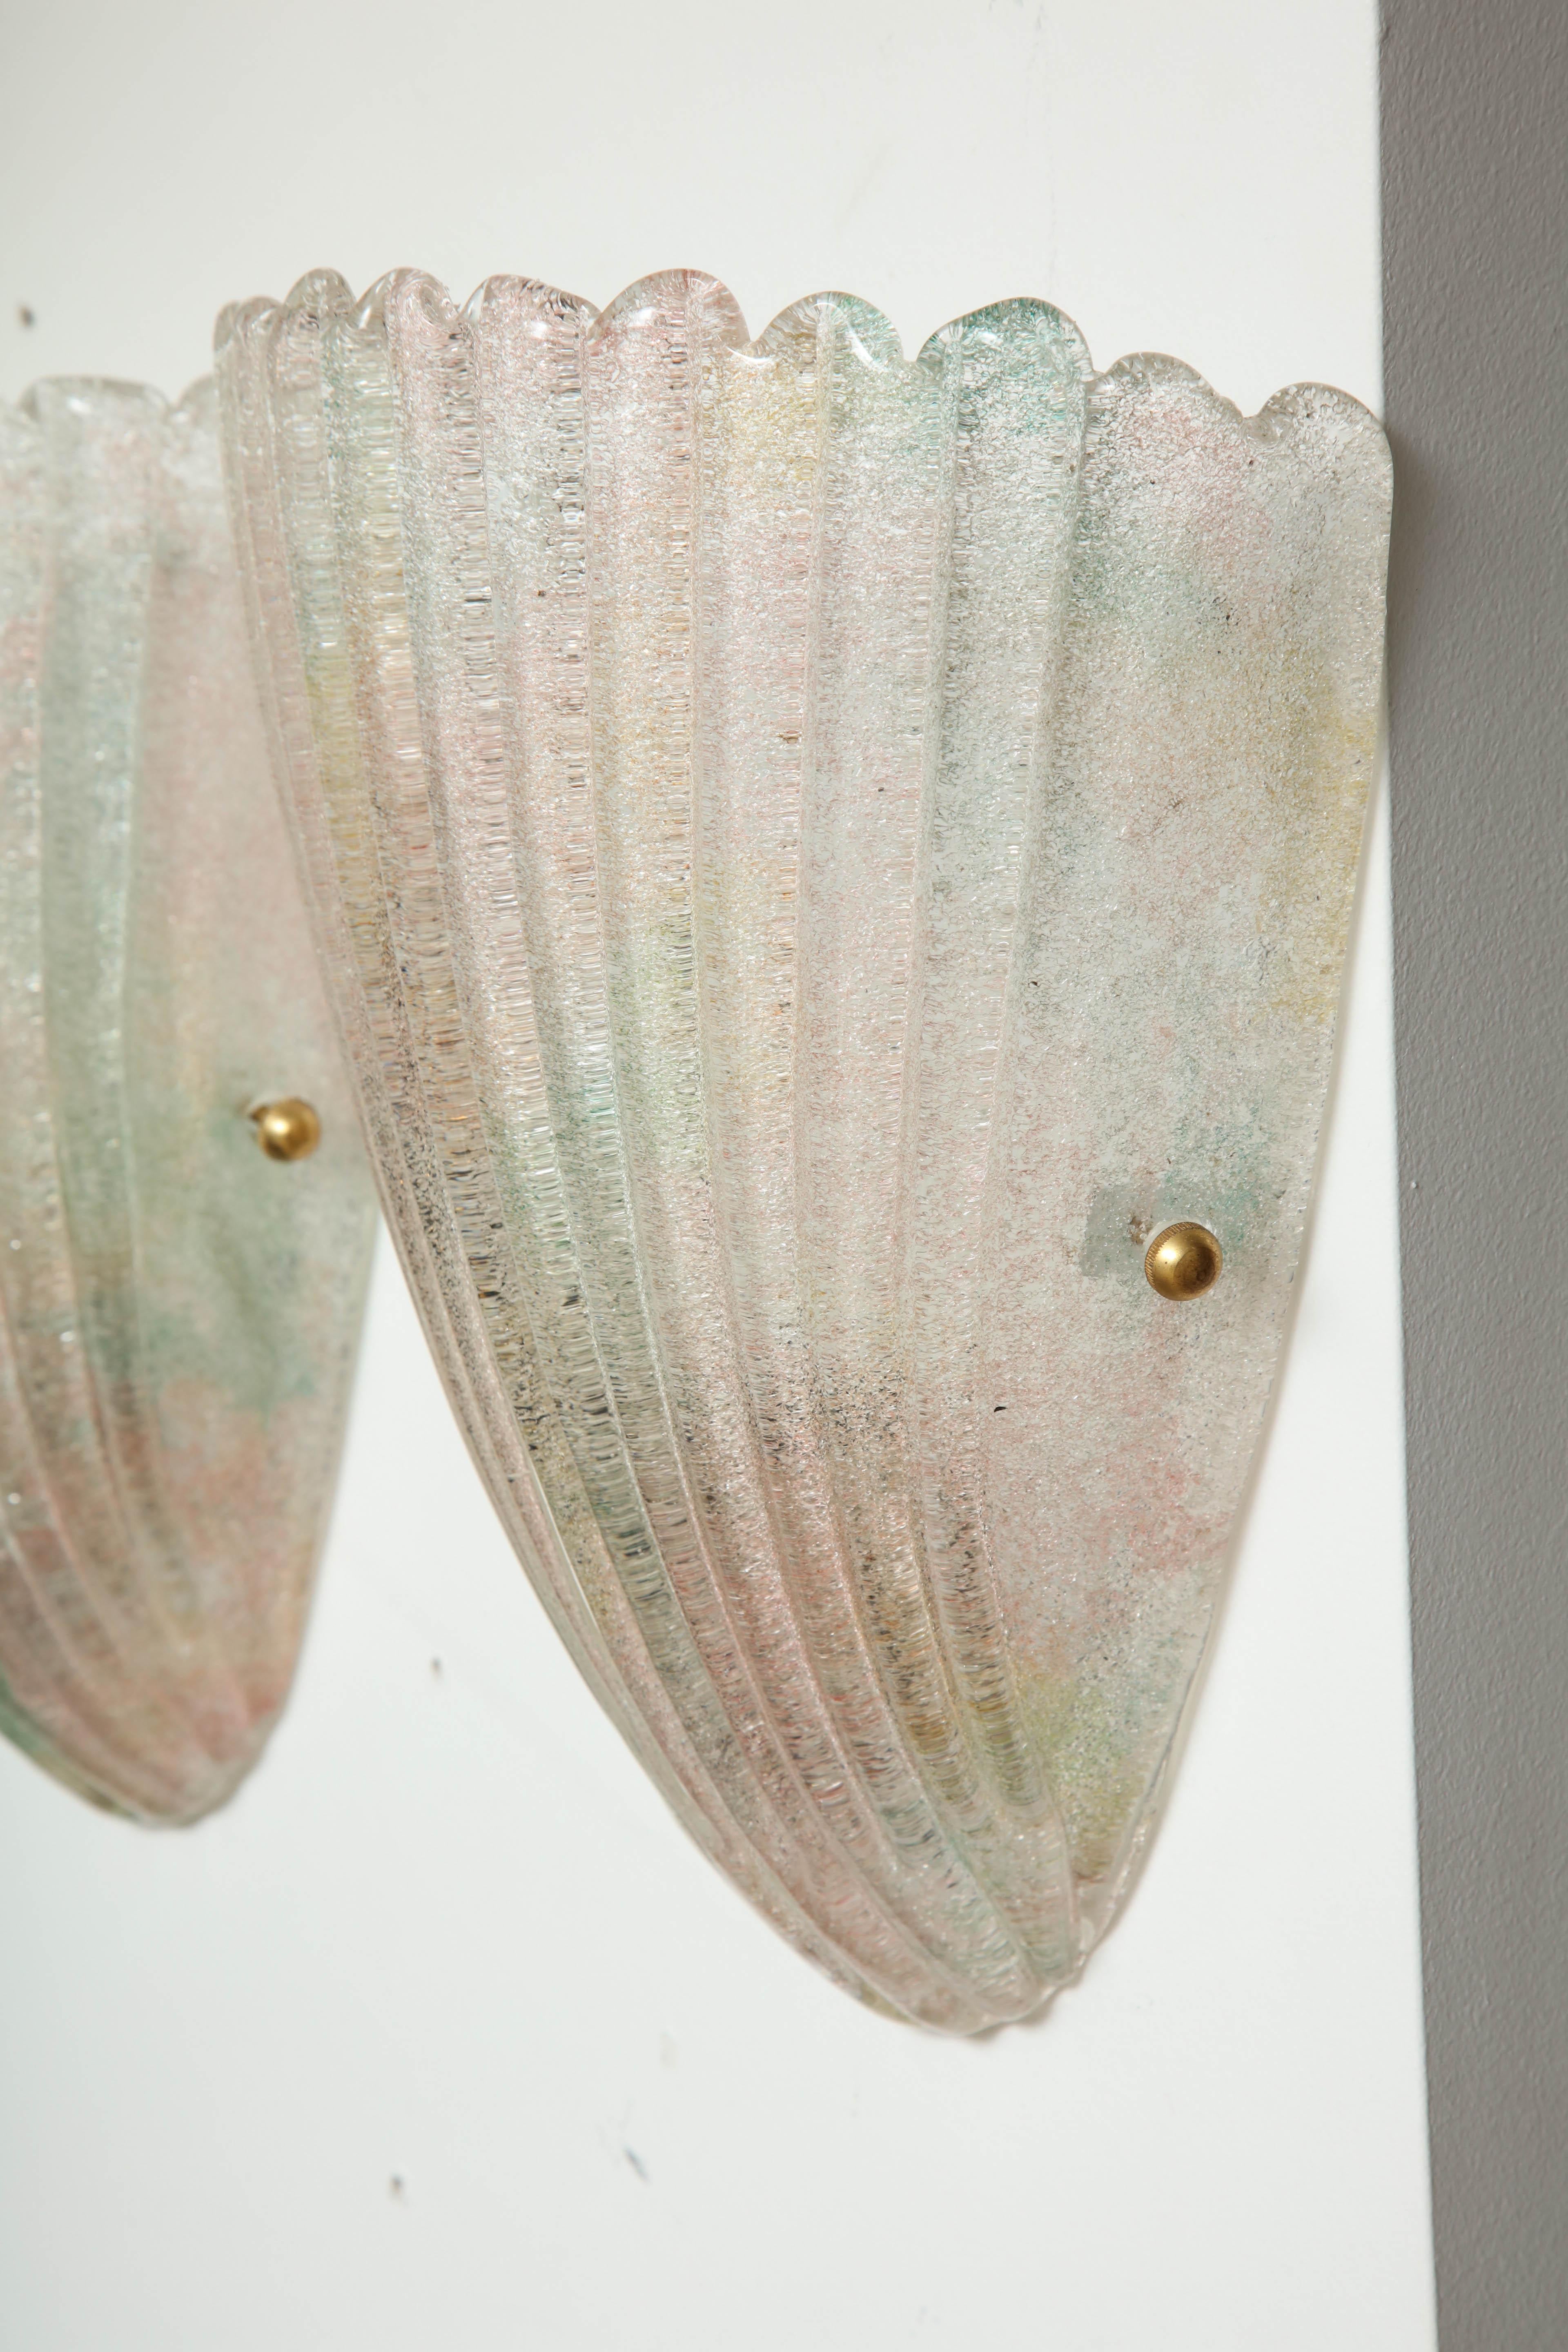 Italian Murano Glass Shell Sconces, 1 of 2 pairs